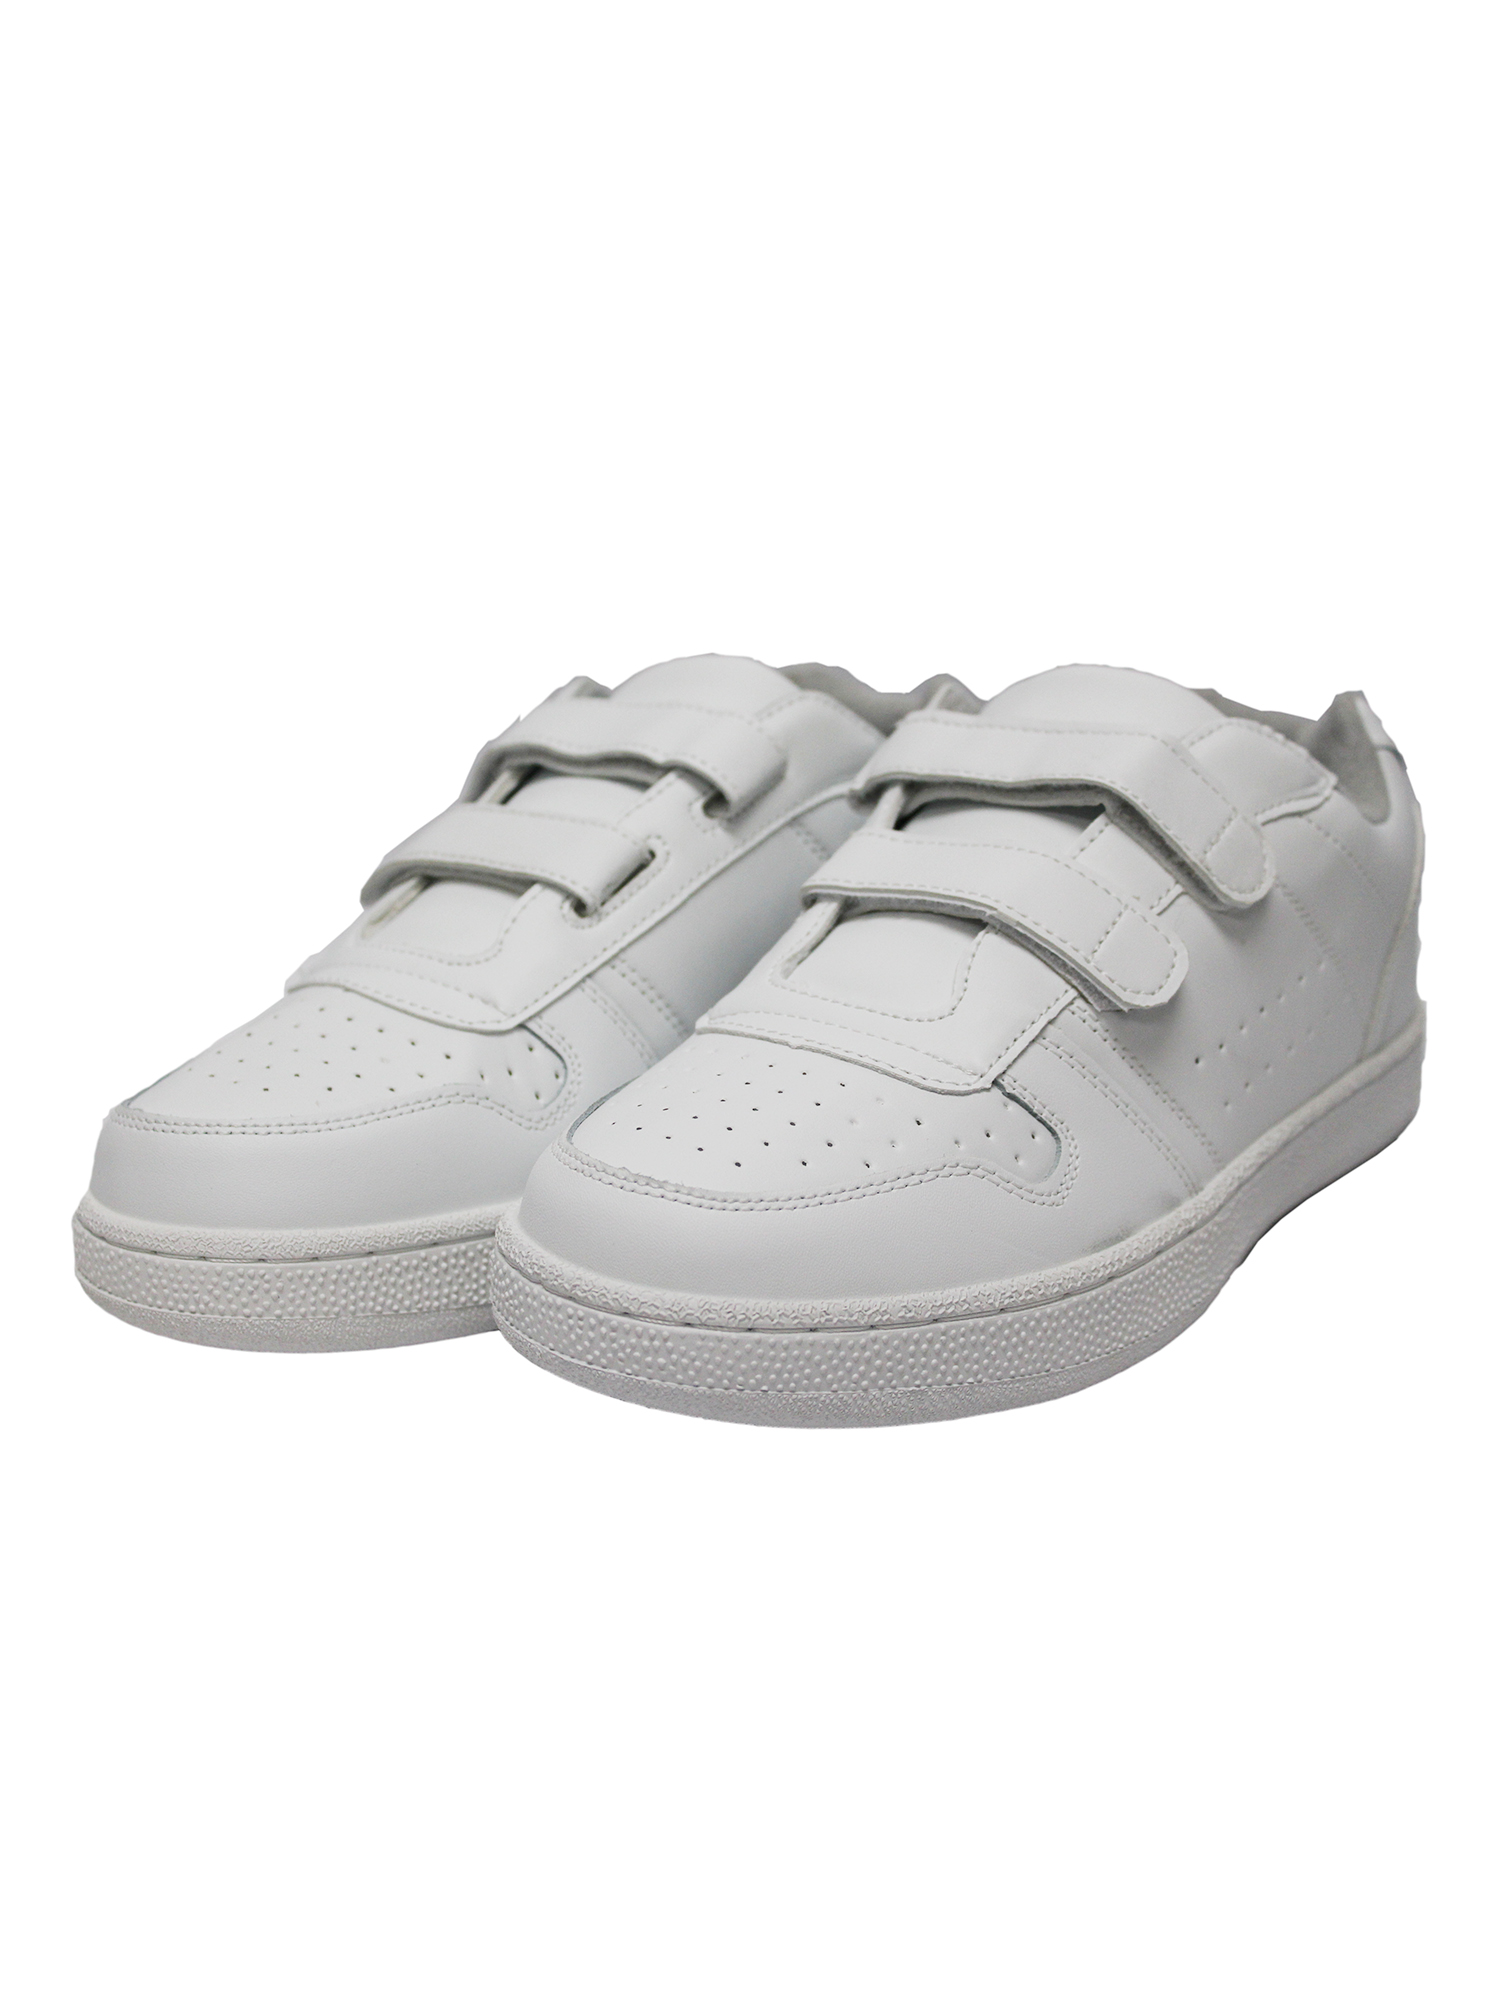 Tanleewa Men's Leather Strap Sneakers Lightweight Hook and Loop Walking Shoe Size 9 Adult Male - image 2 of 5